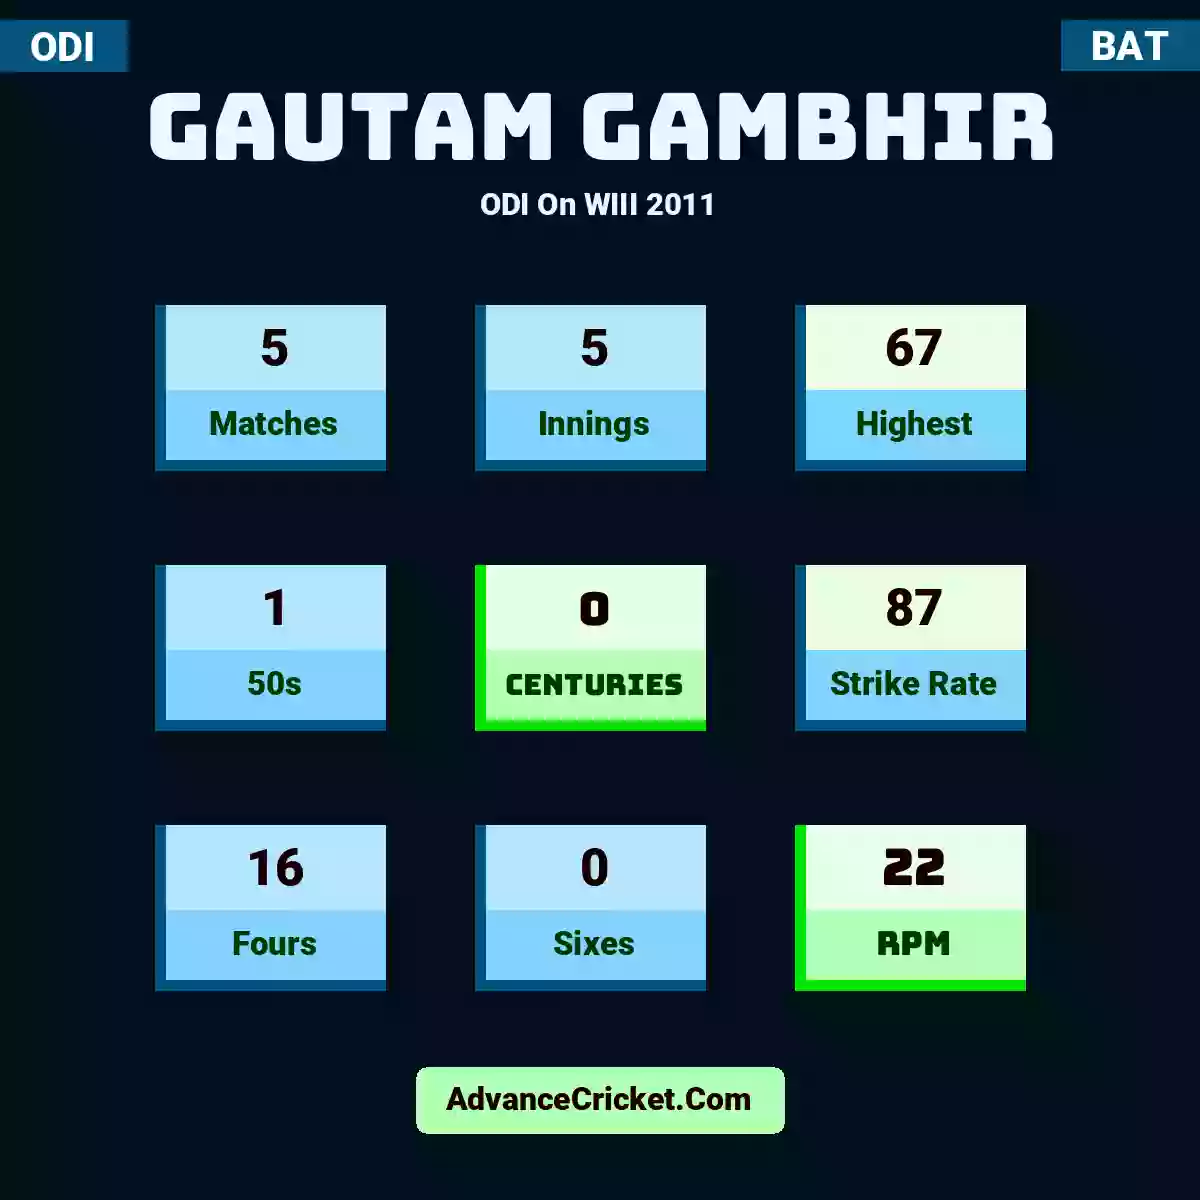 Gautam Gambhir ODI  On WIII 2011, Gautam Gambhir played 5 matches, scored 67 runs as highest, 1 half-centuries, and 0 centuries, with a strike rate of 87. G.Gambhir hit 16 fours and 0 sixes, with an RPM of 22.